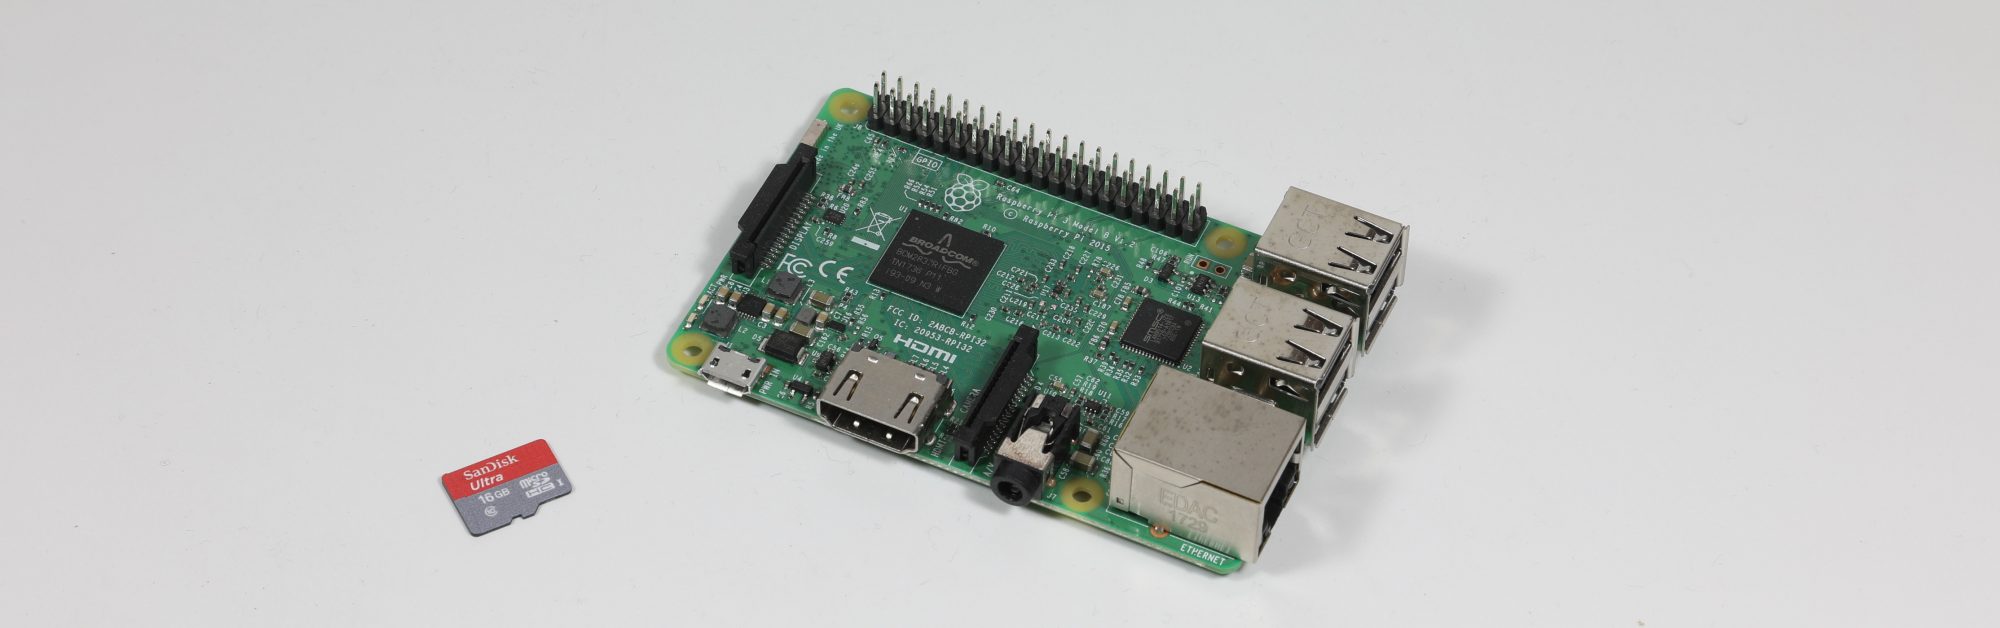 Raspberry Pi mit SD Karte